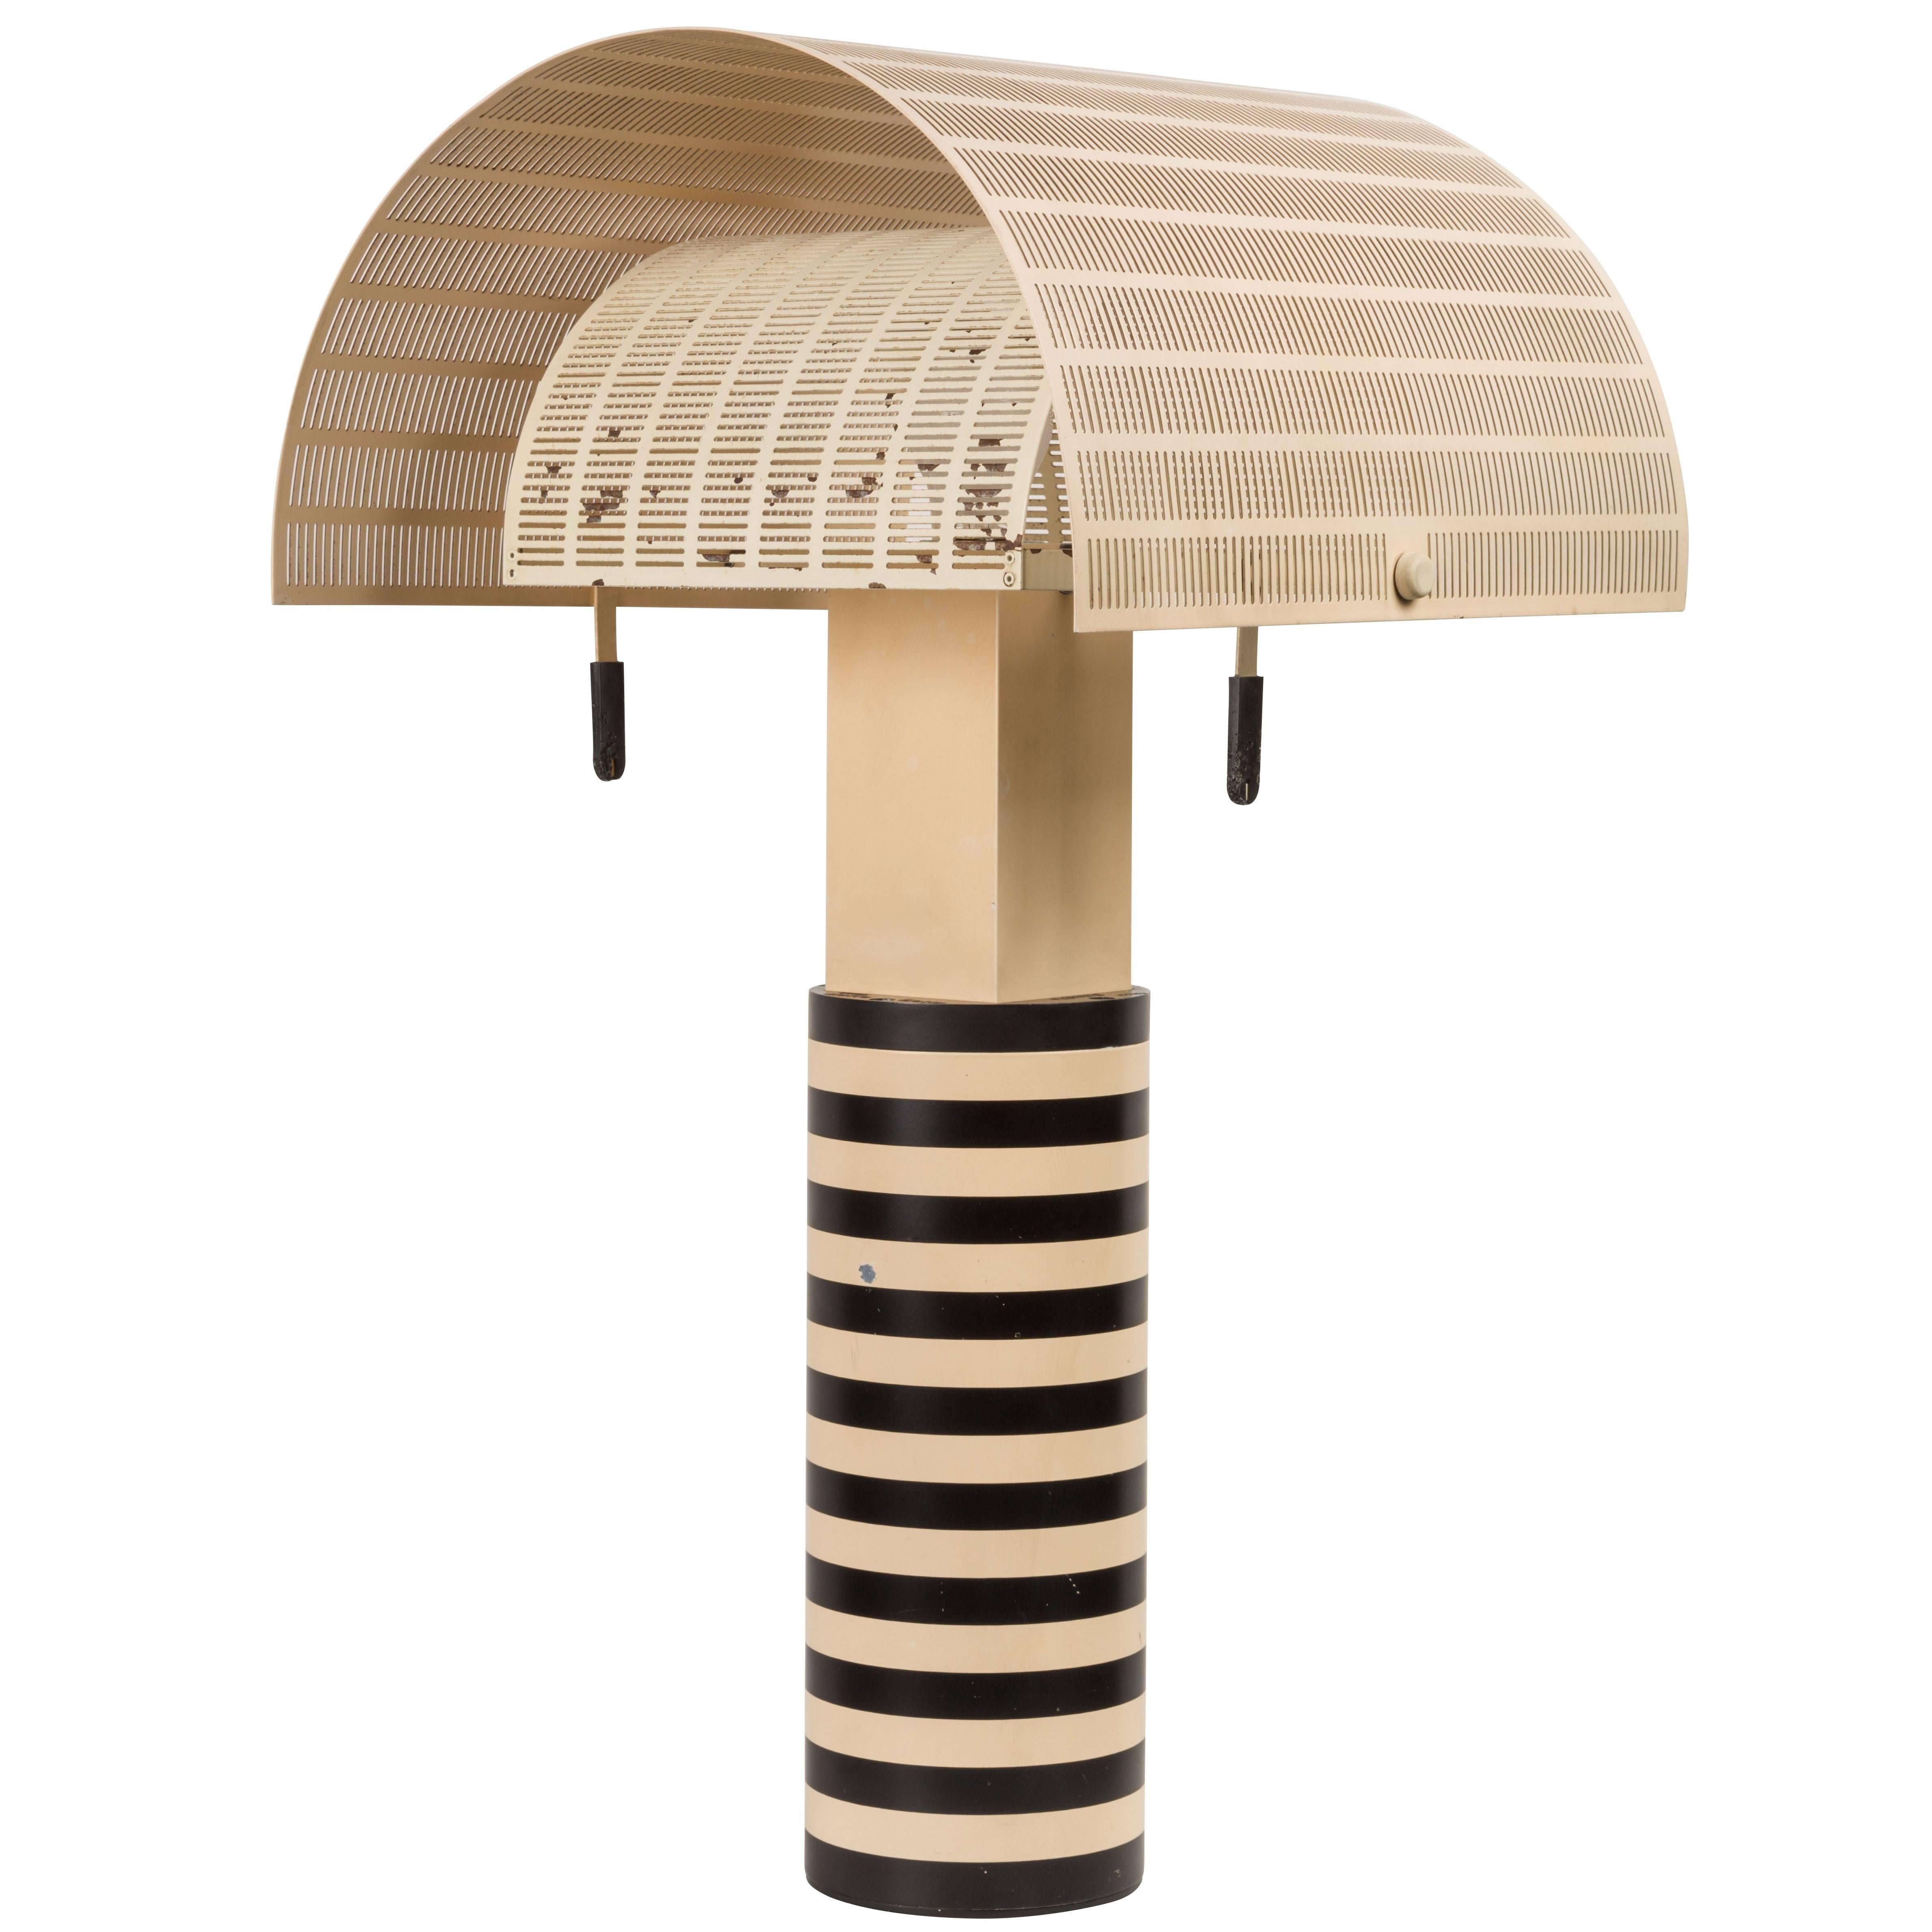 Shogun Table Lamp by Mario Botta